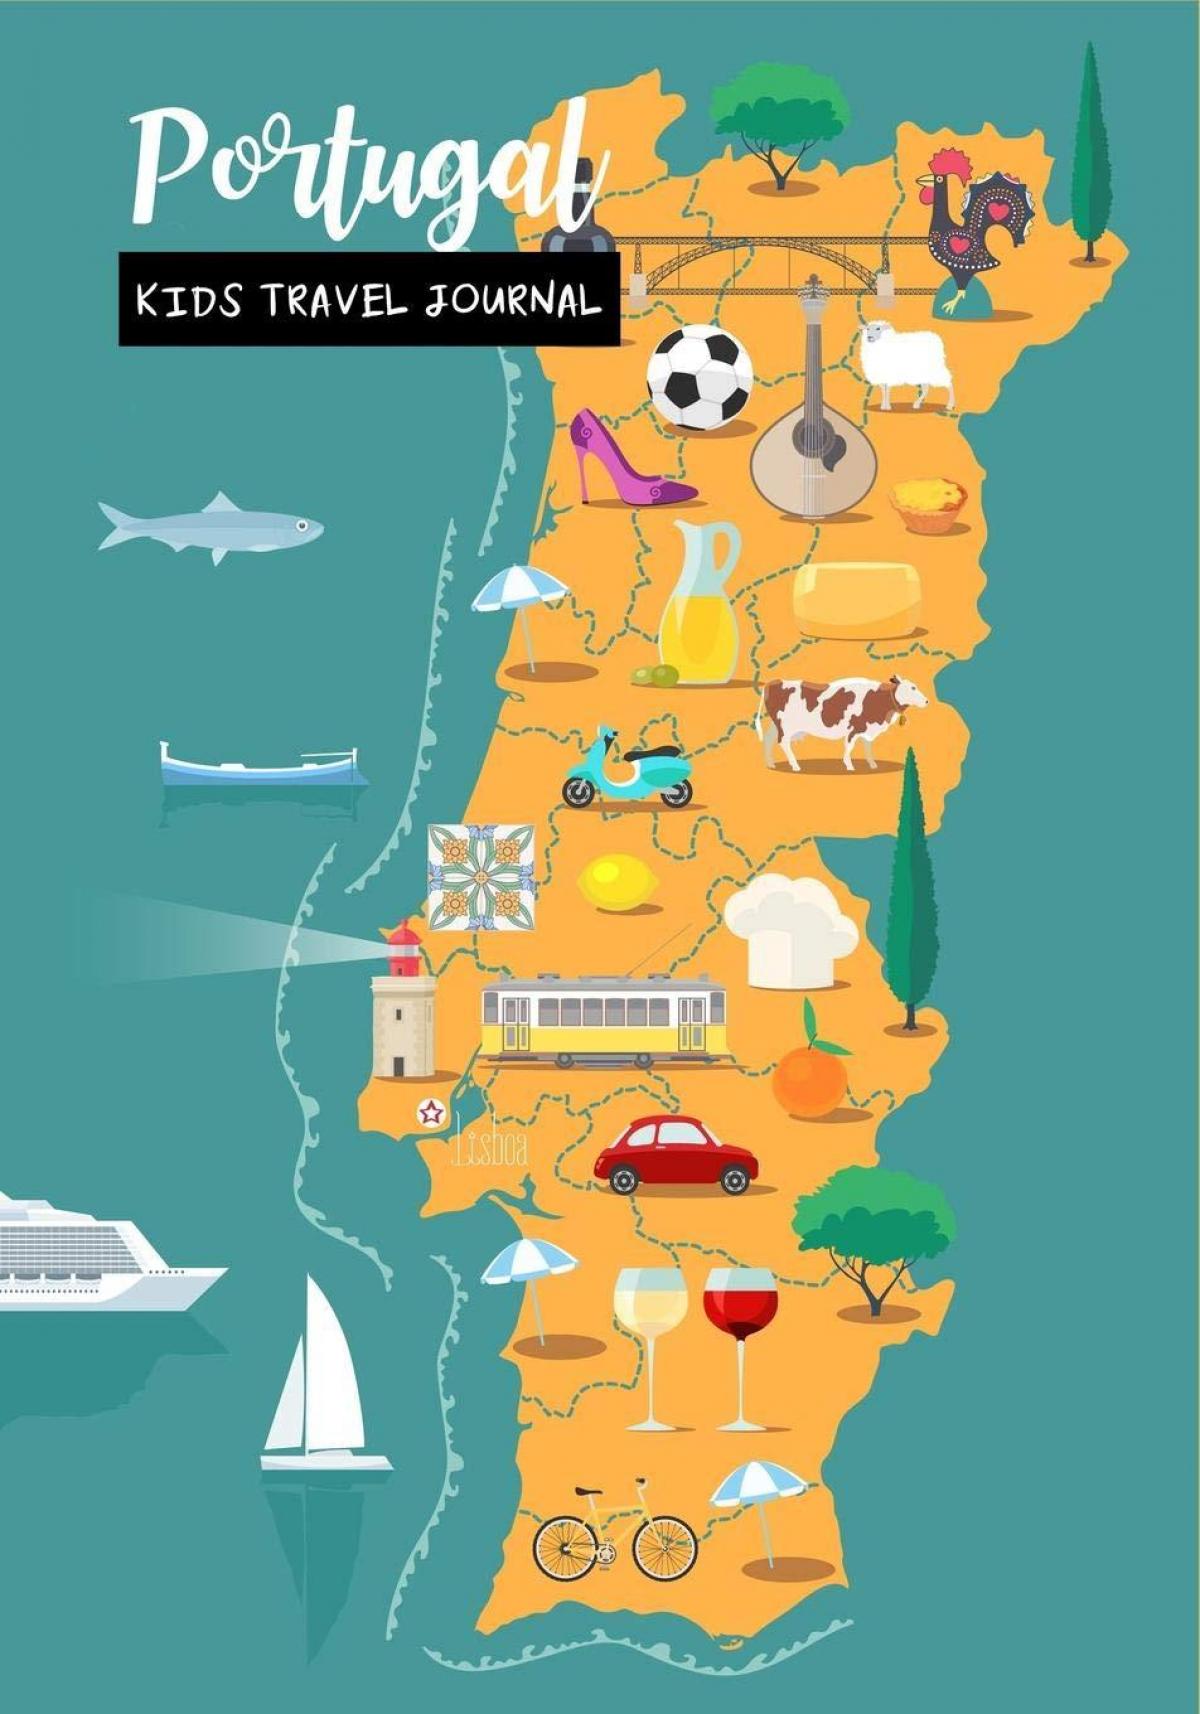 Turismo en Portugal: Mapa General de Portugal